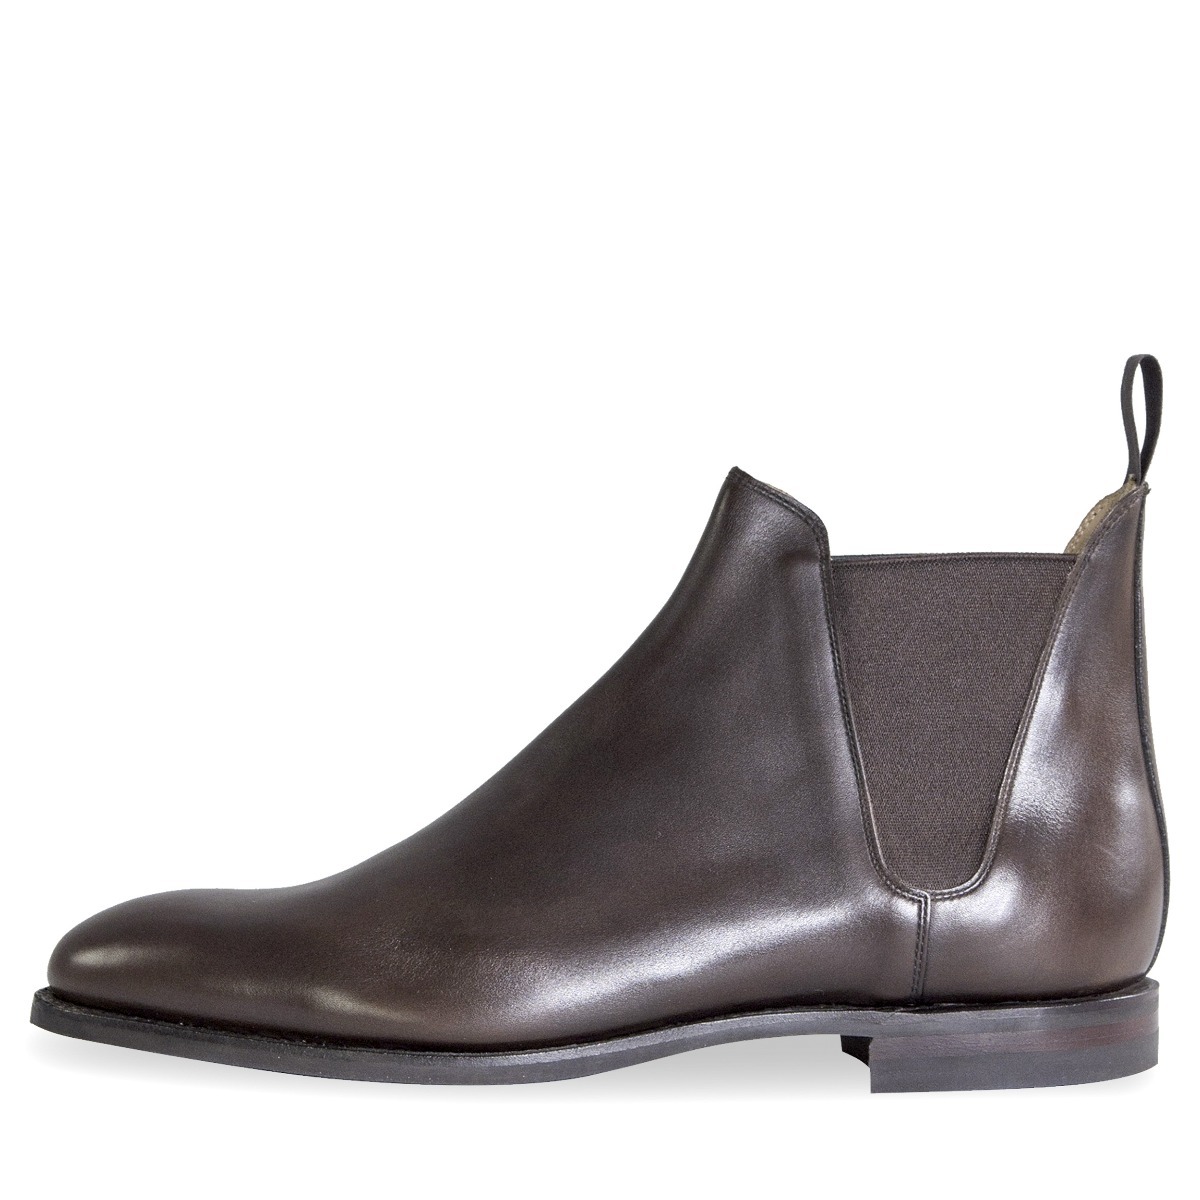 Crockett & Jones ’Chelsea VIII’ Burnished Calf Leather Boots Dark Brown